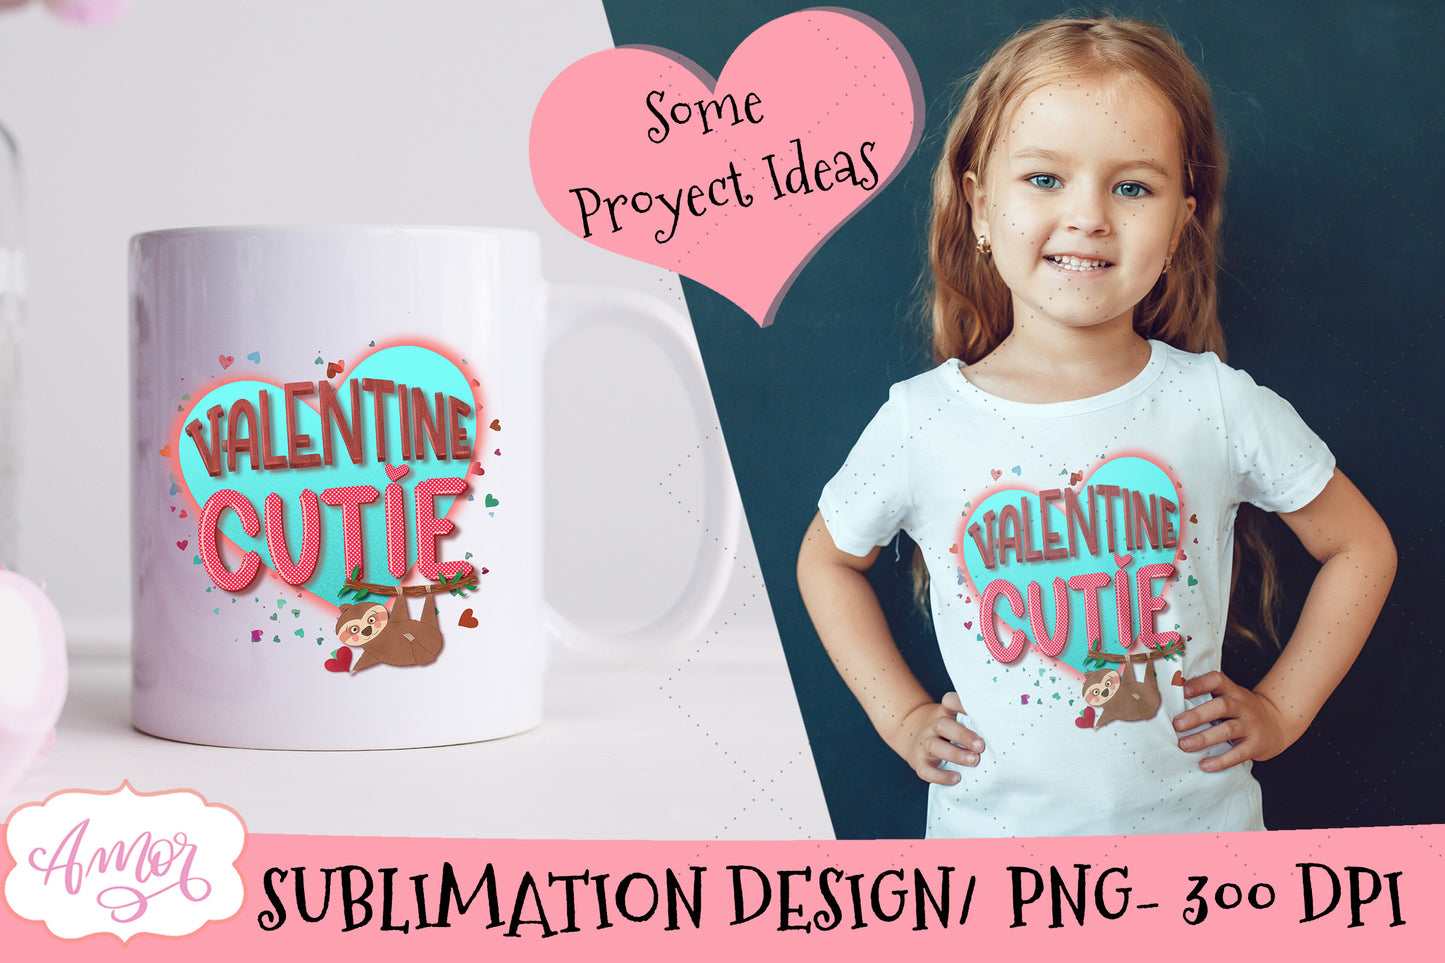 Valentine Cutie Sloth PNG design for sublimation